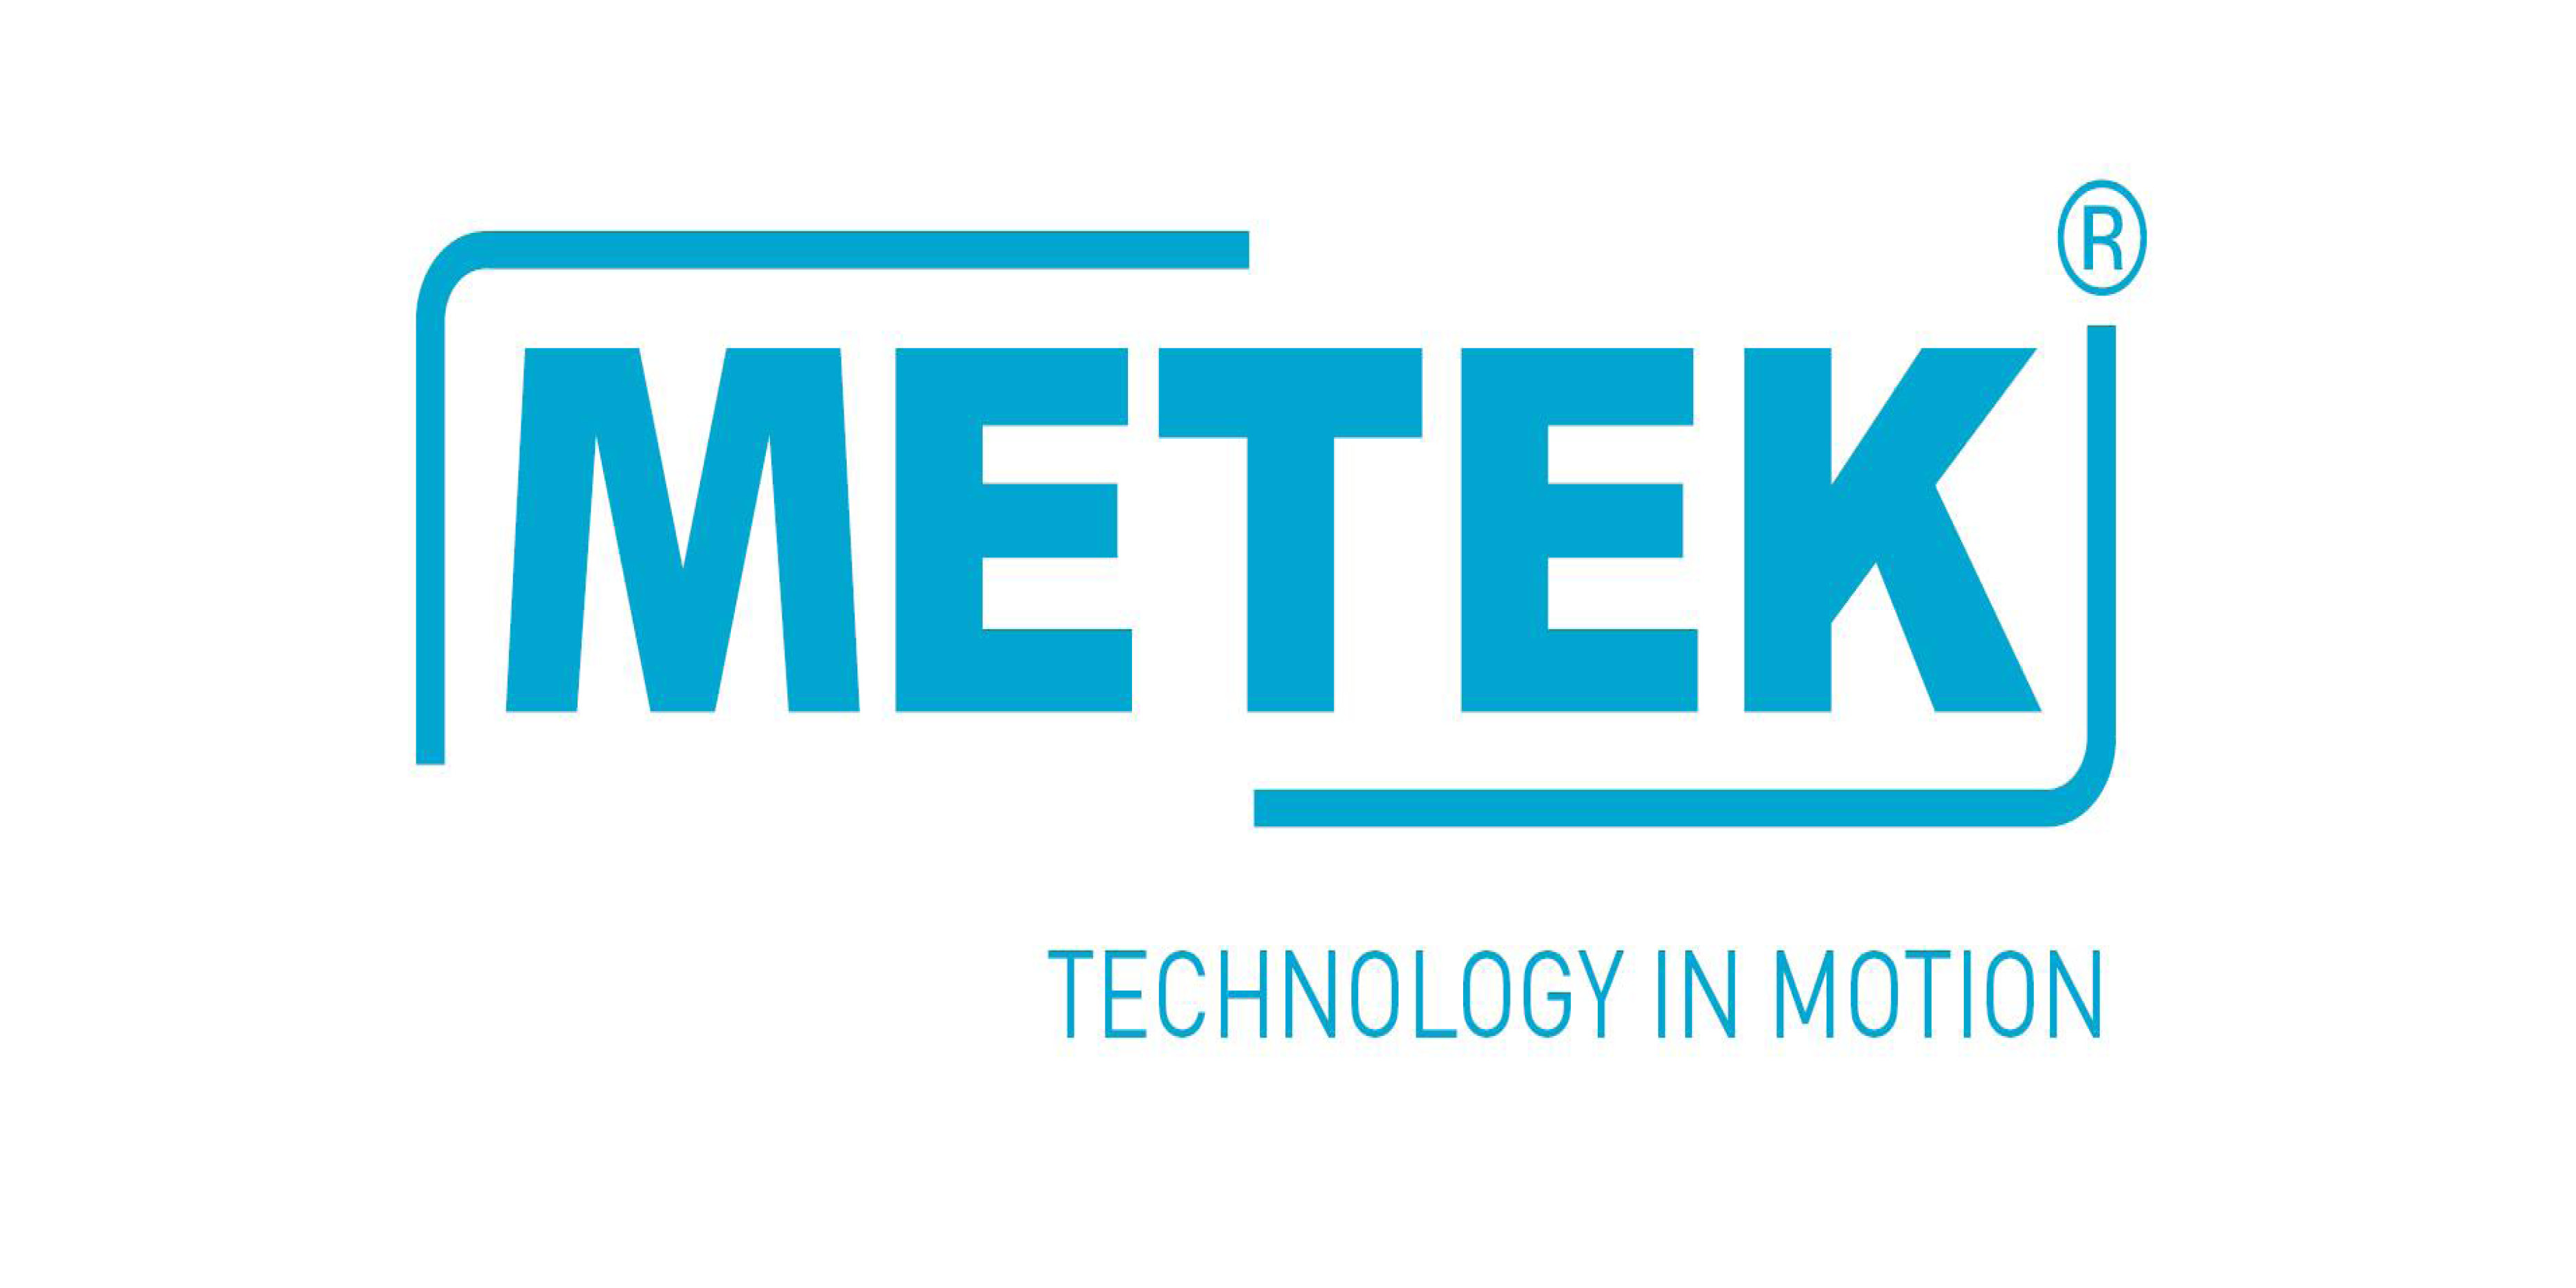 Metek GmbH | srl